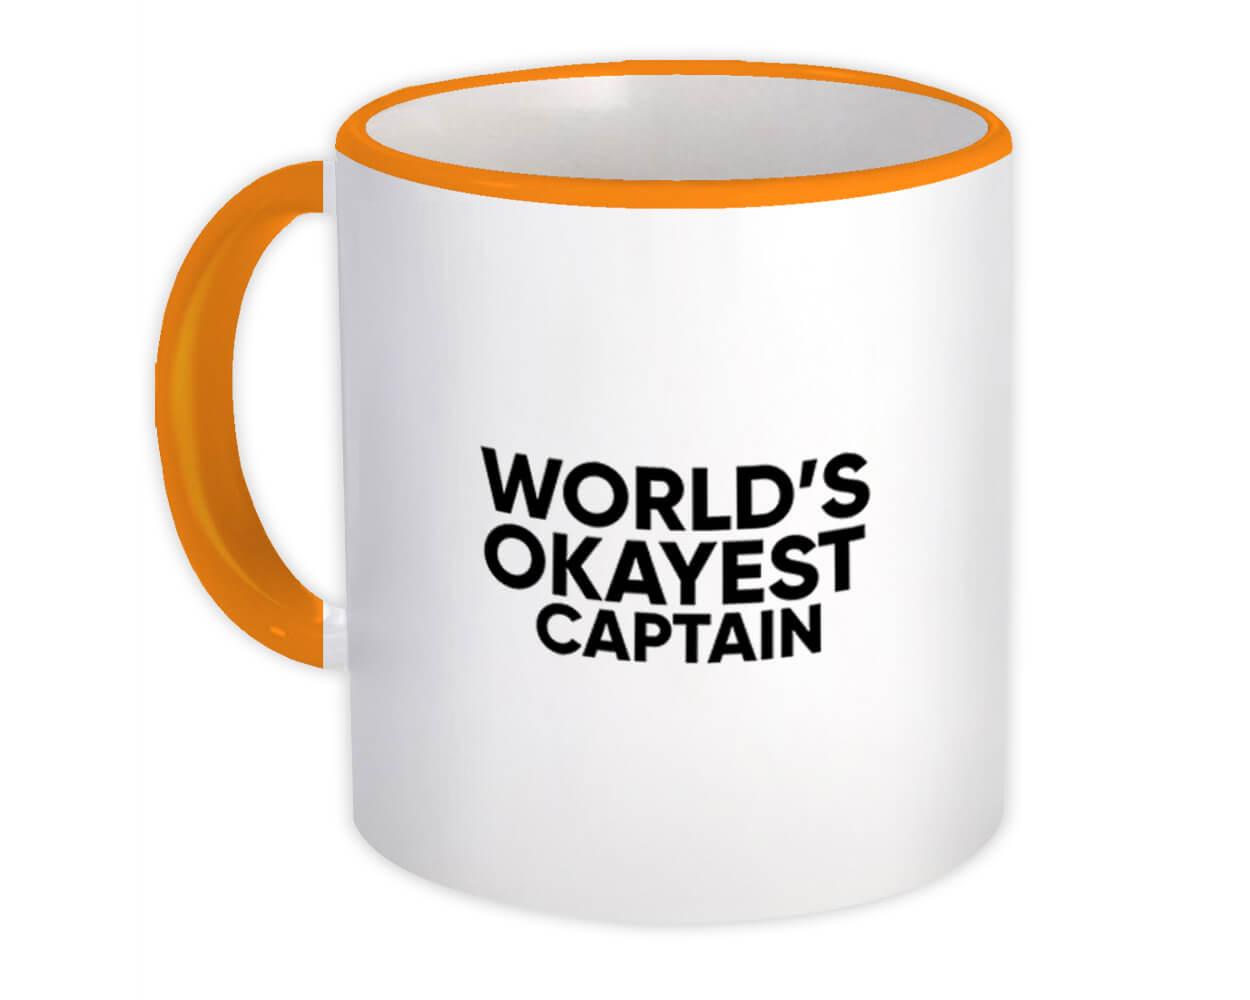 Best Captain Ever Captain Coffee Mug Captain Gifts Captain Mugs Gift For Captain Birthday Anniversary Gift Christmas Present